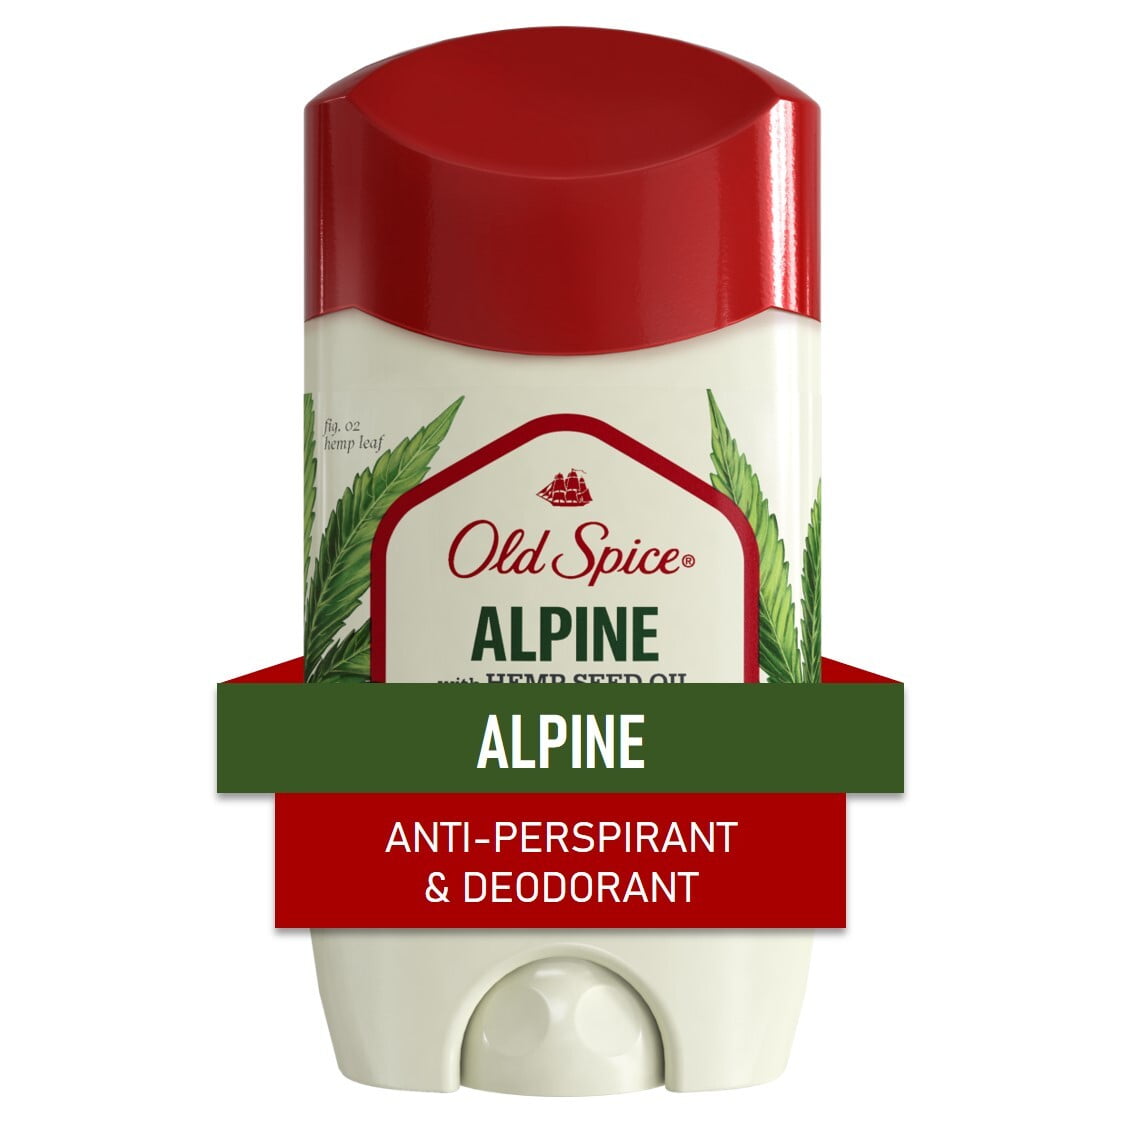 Old Spice Antiperspirant Deodorant, Alpine with Hemp Seed Oil 2.6 oz